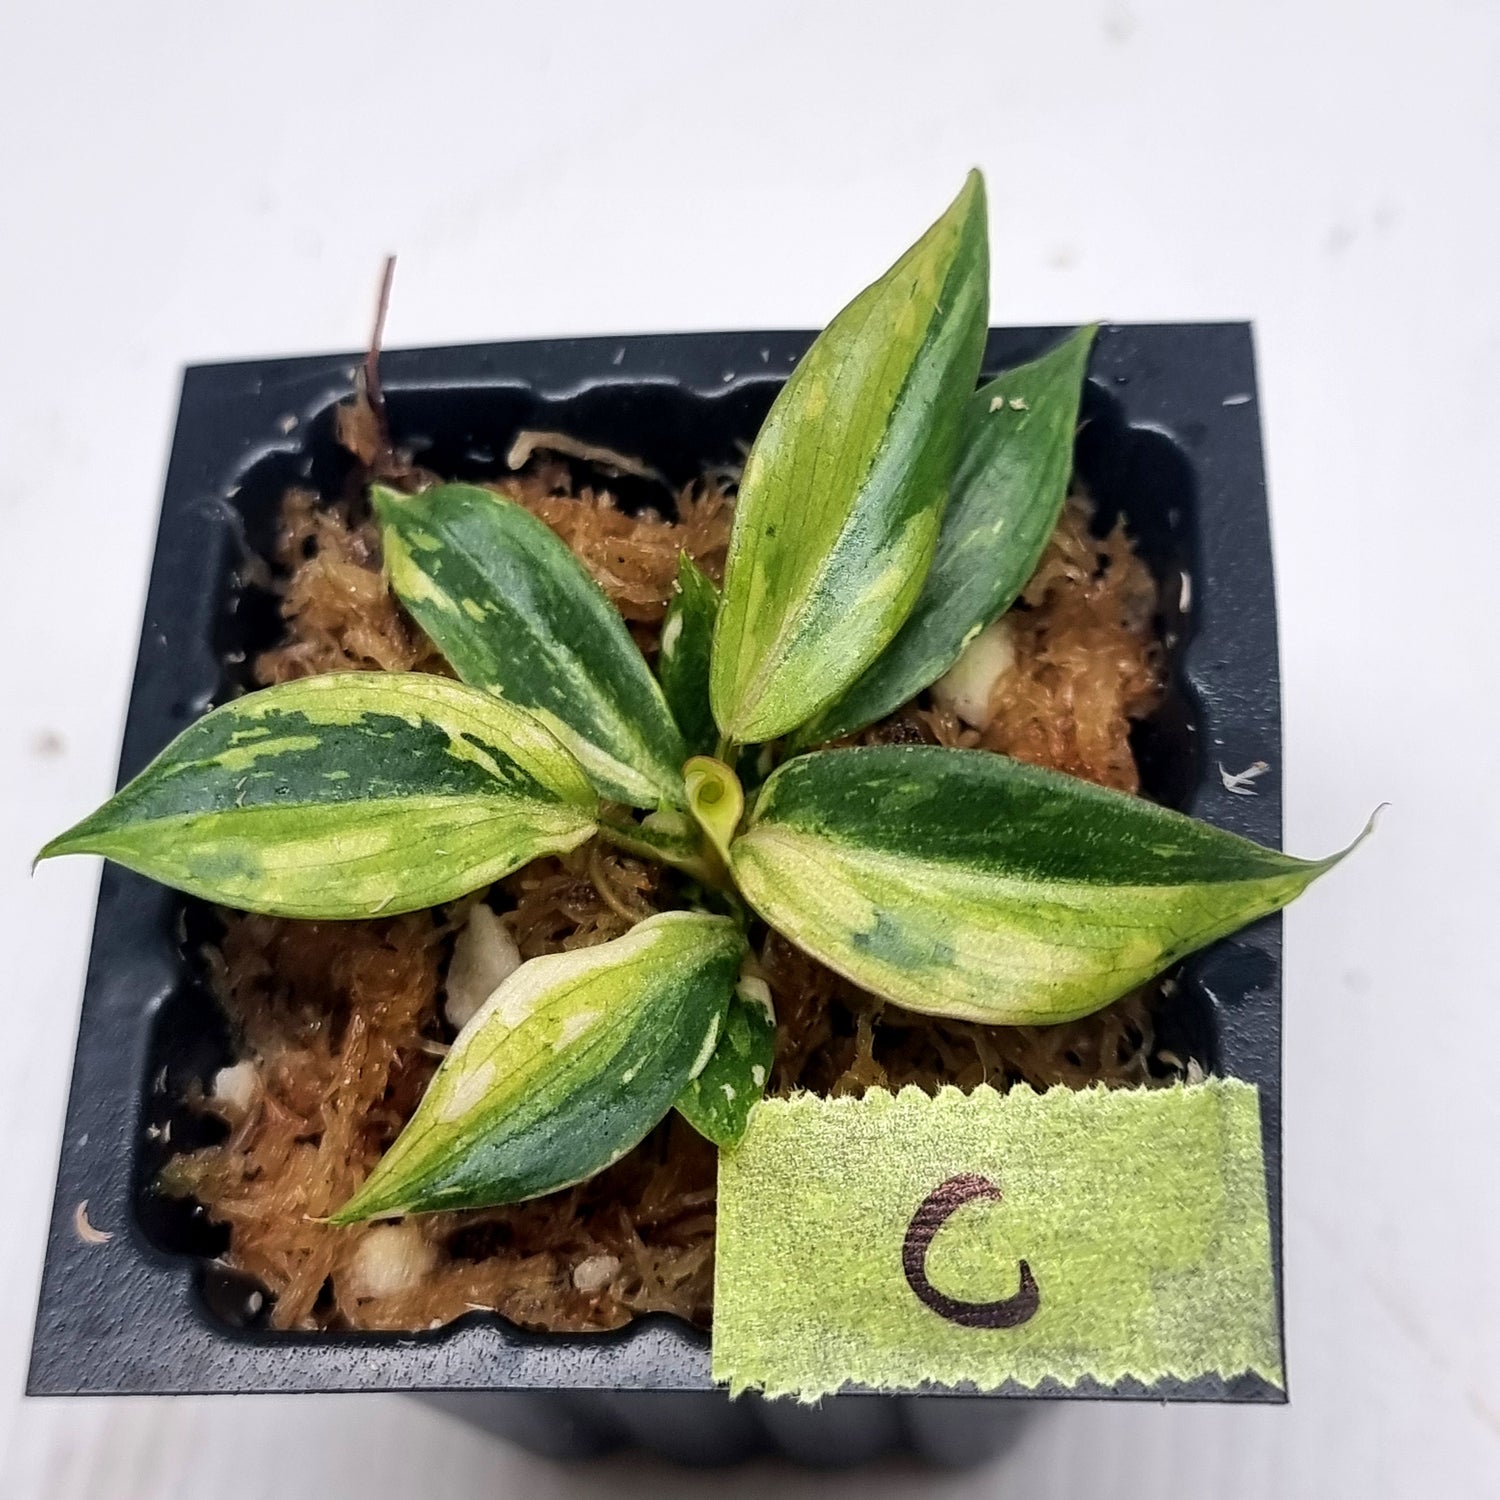 rare Philodendron gloriosum Variegated for sale in Perth Australia